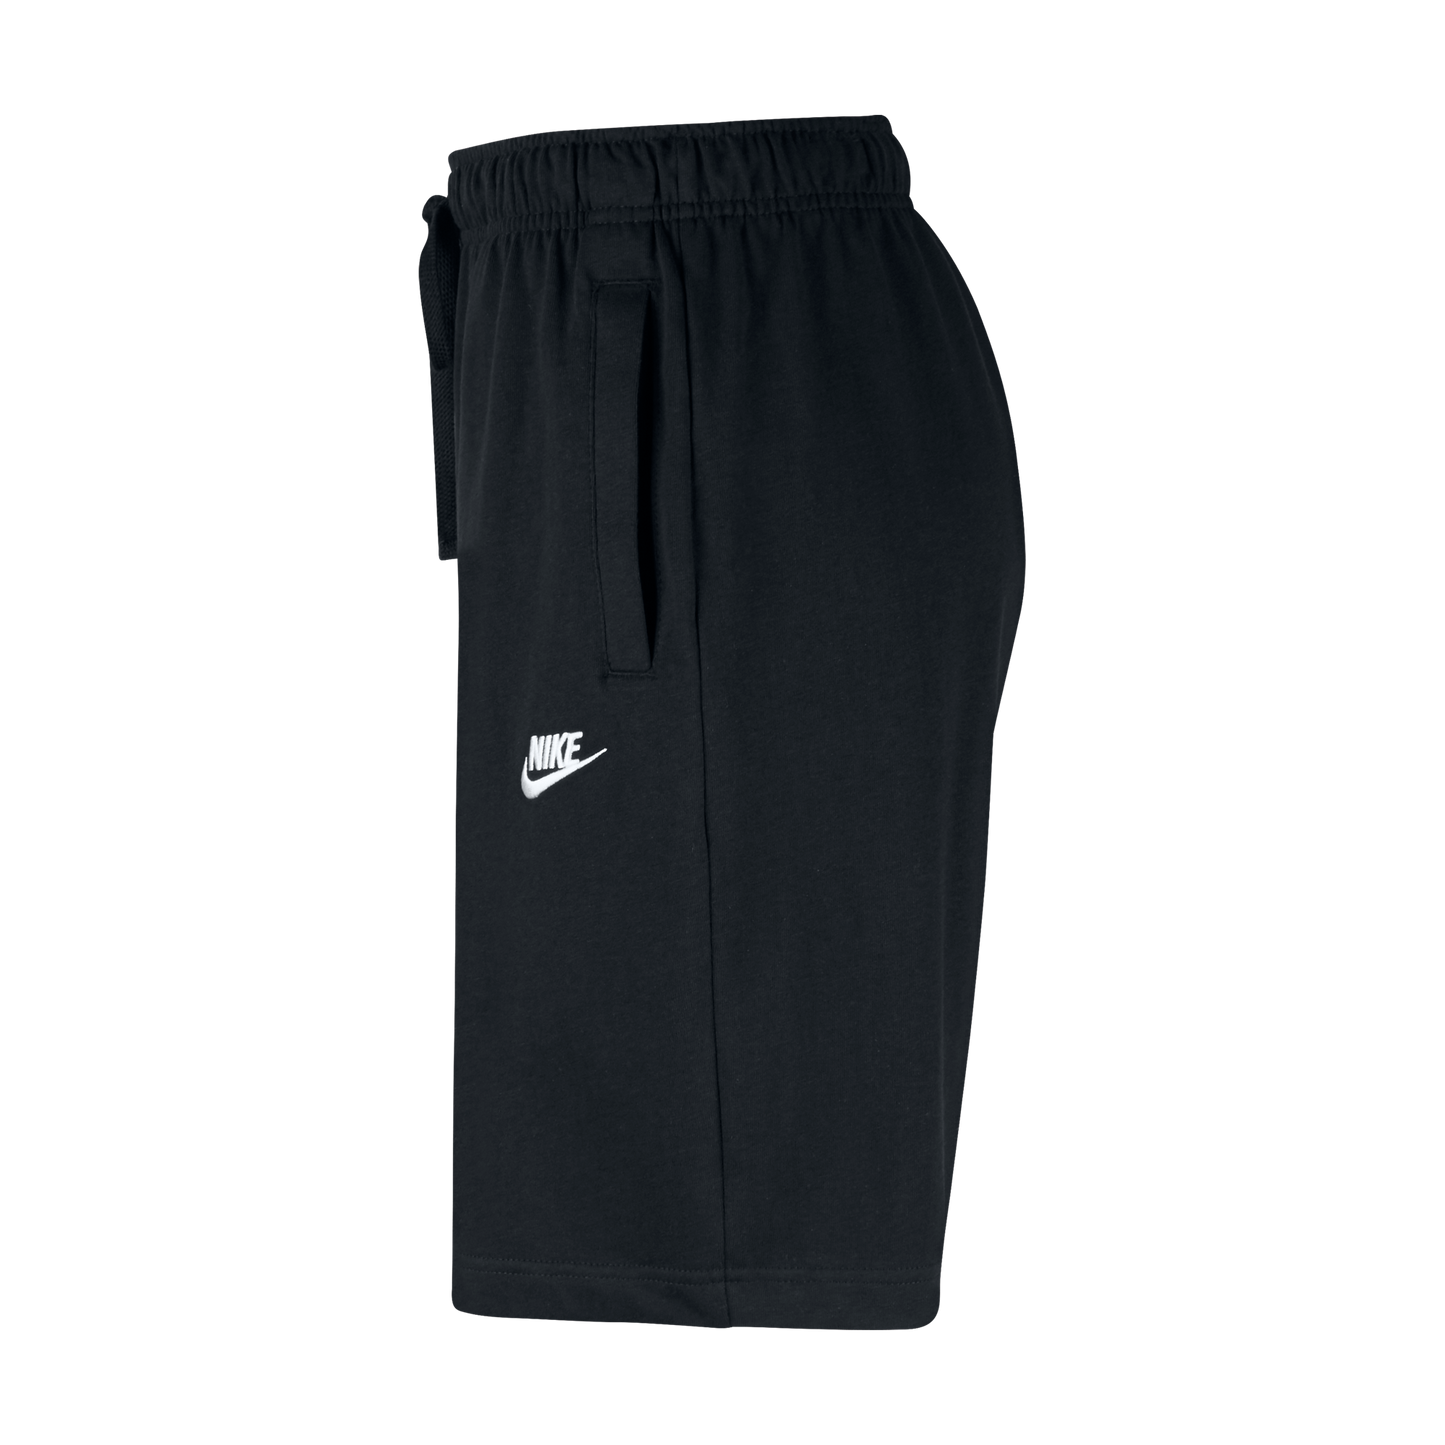 NSW Jersey Club Shorts